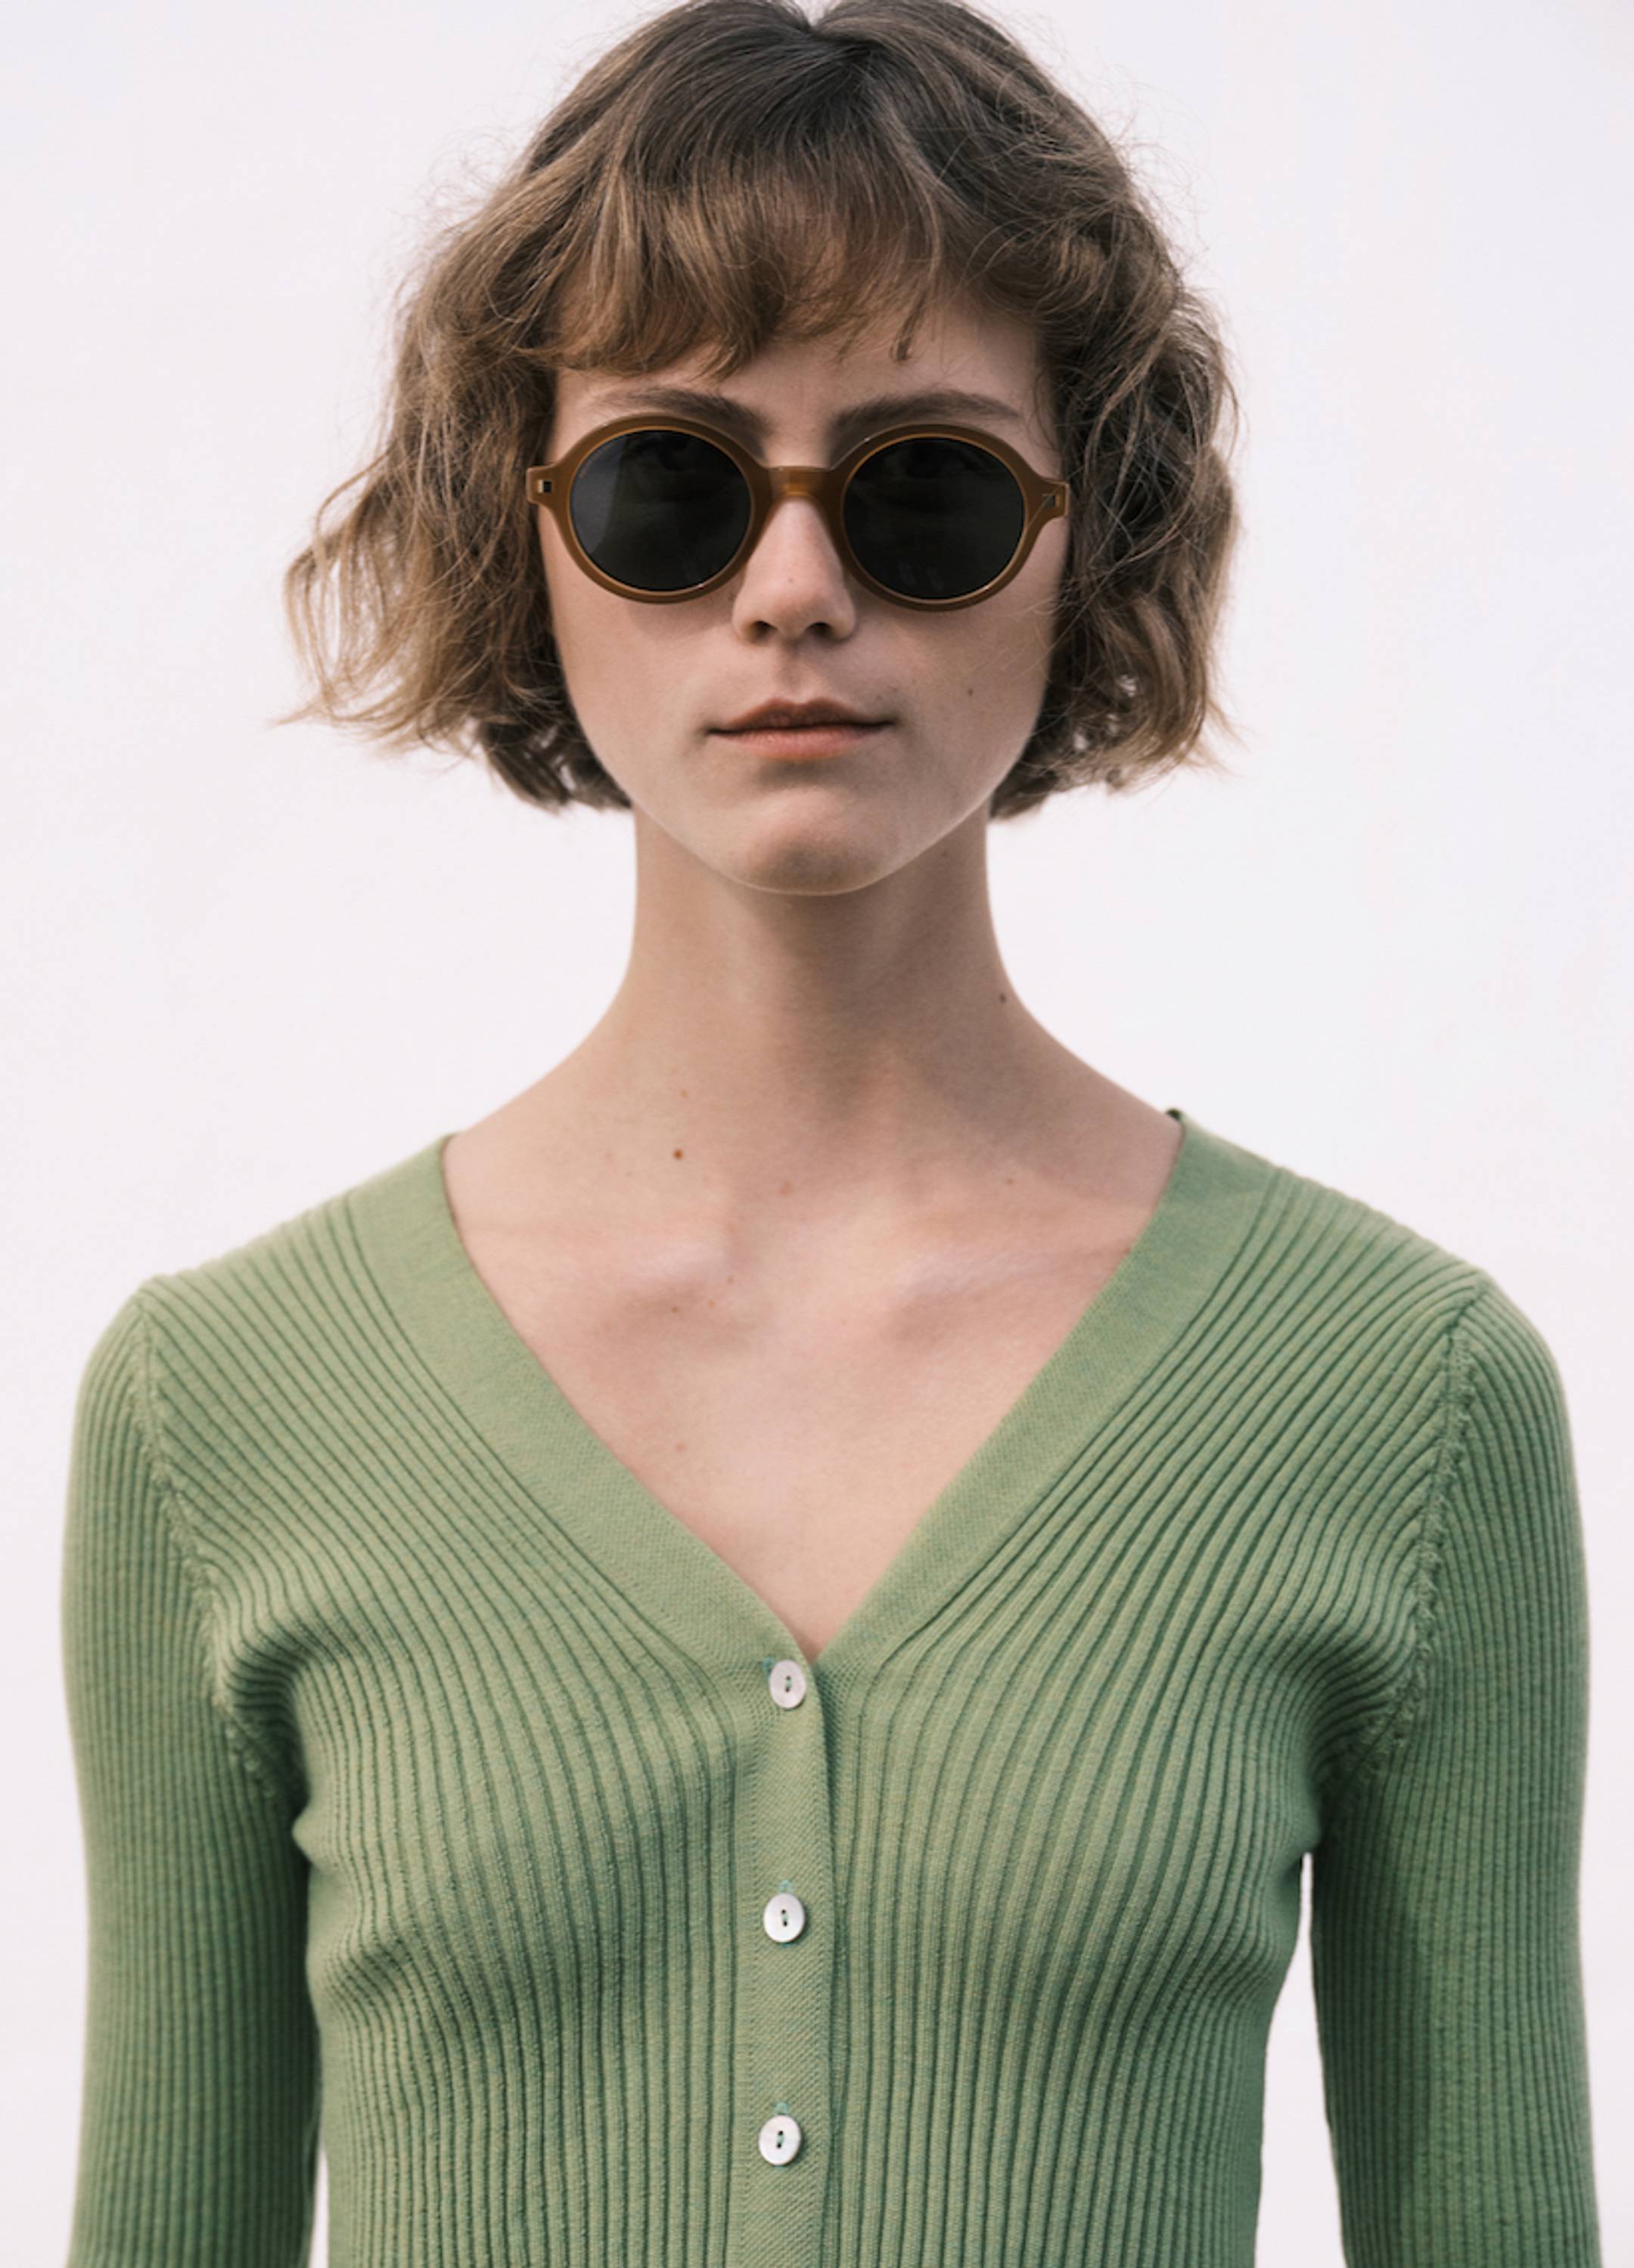 Female model wearing Mykita sunglasses